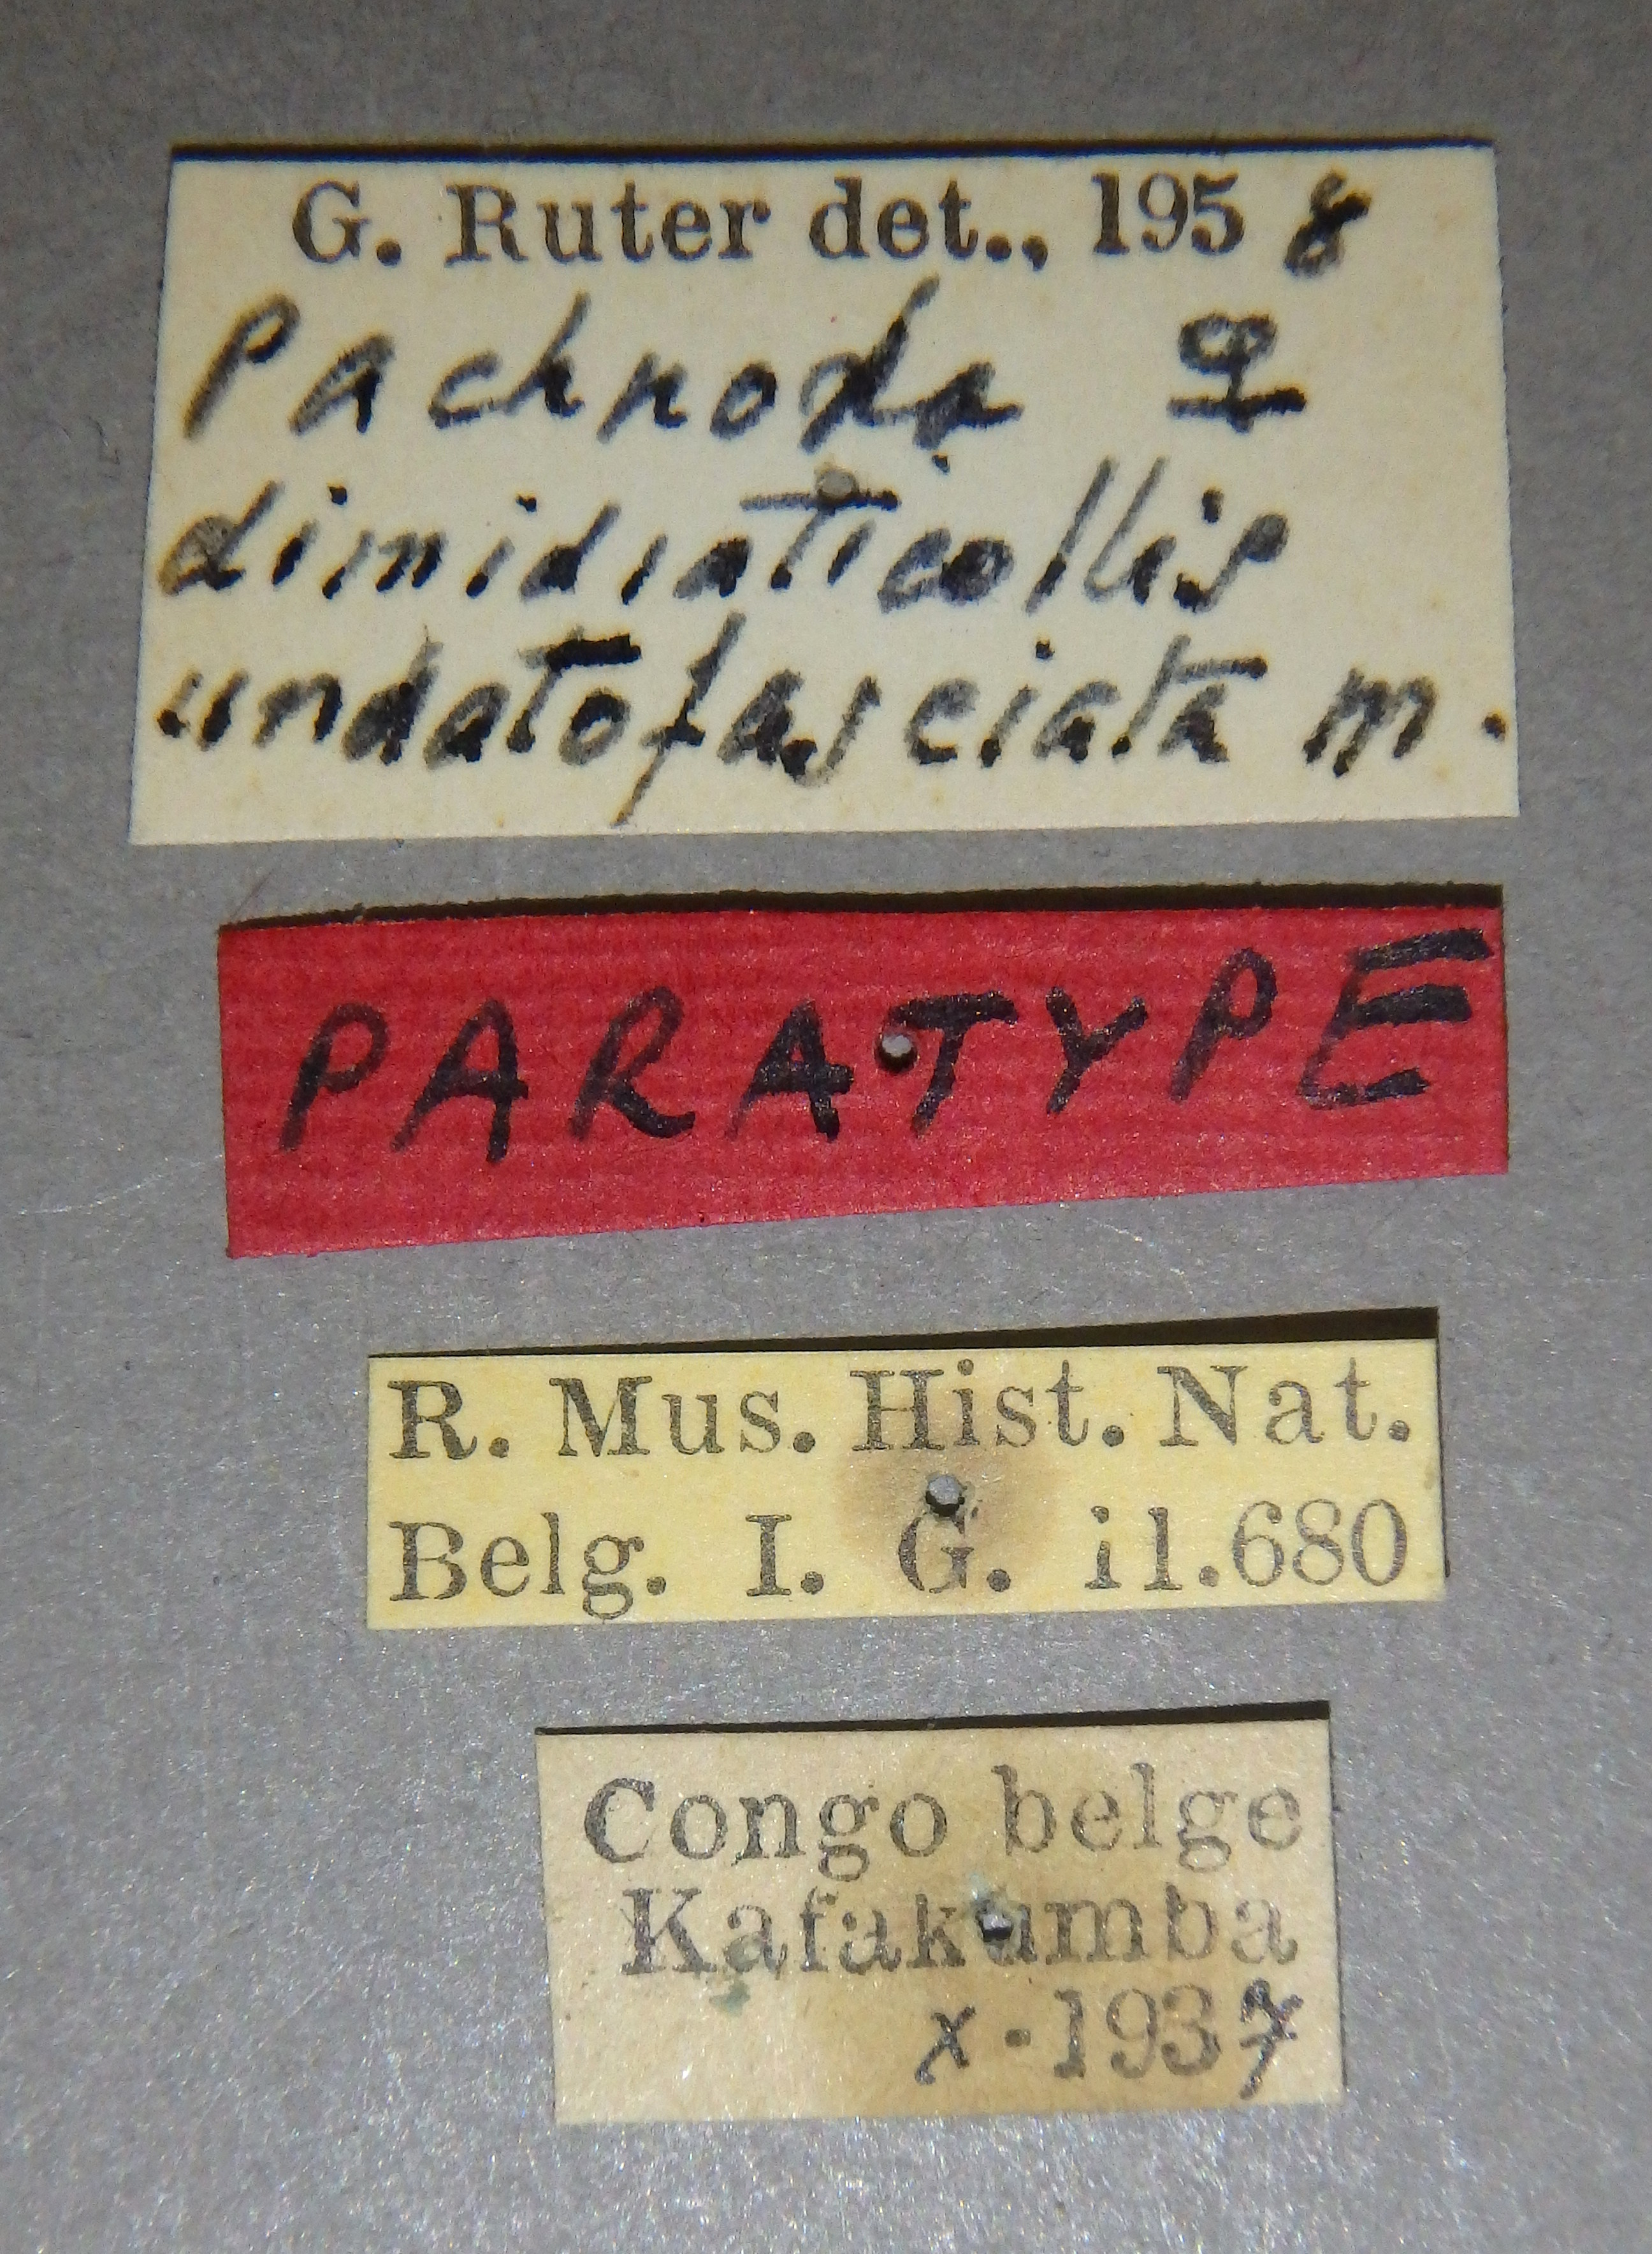 Pachnoda dimidiaticollis undatofasciata pt Lb.jpg